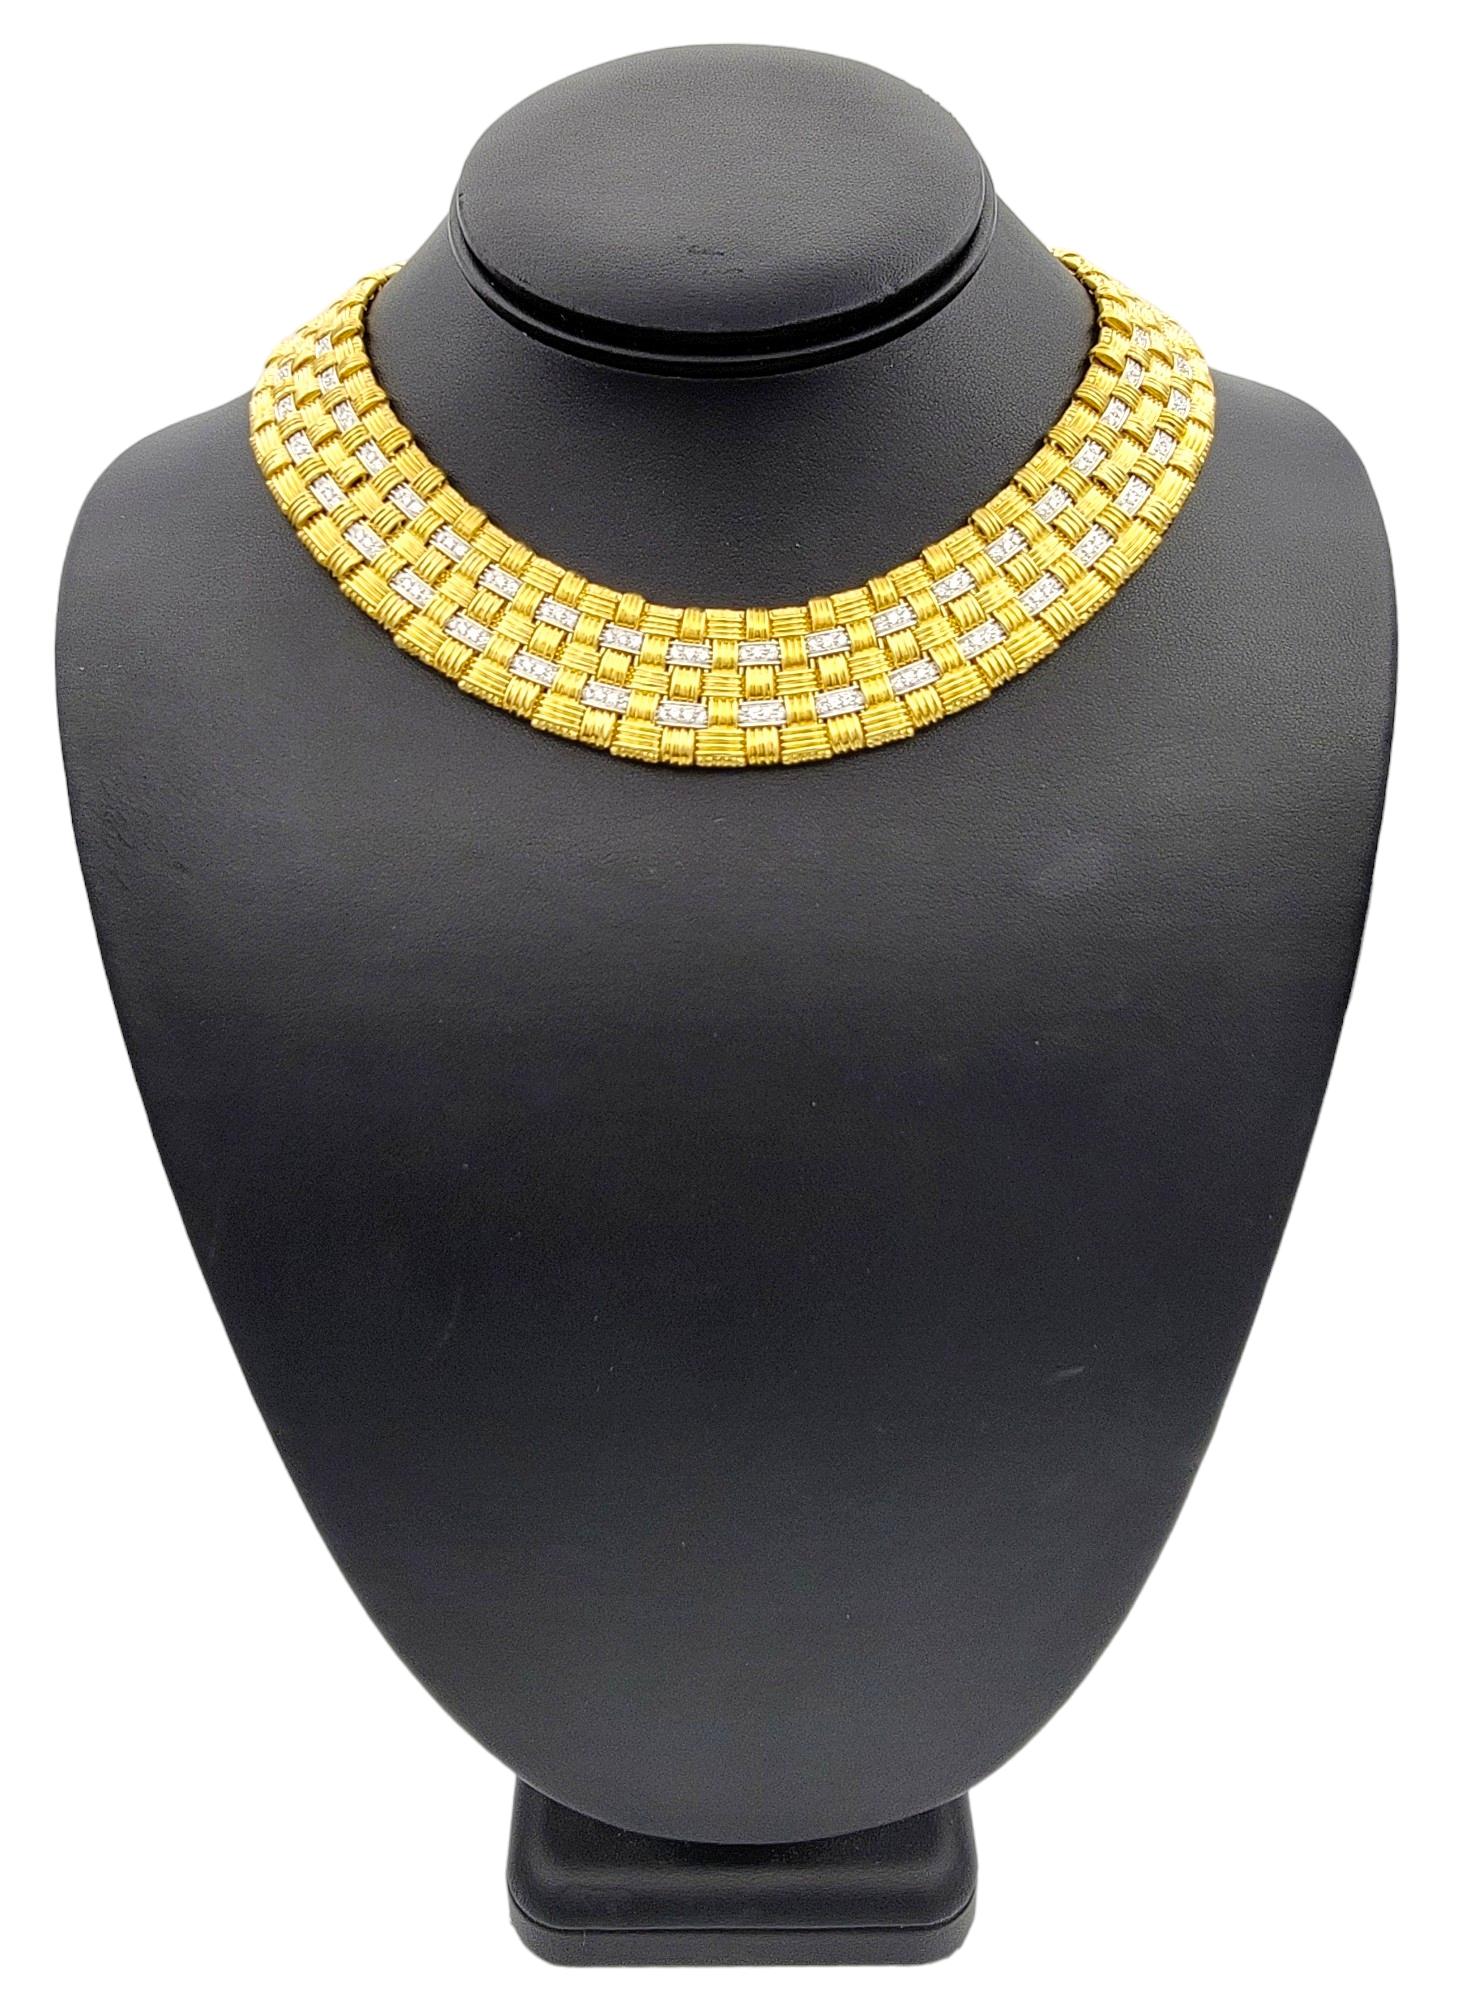 Roberto Coin Appassionata Diamond Basket Weave Collar Necklace in 18 Karat Gold 2